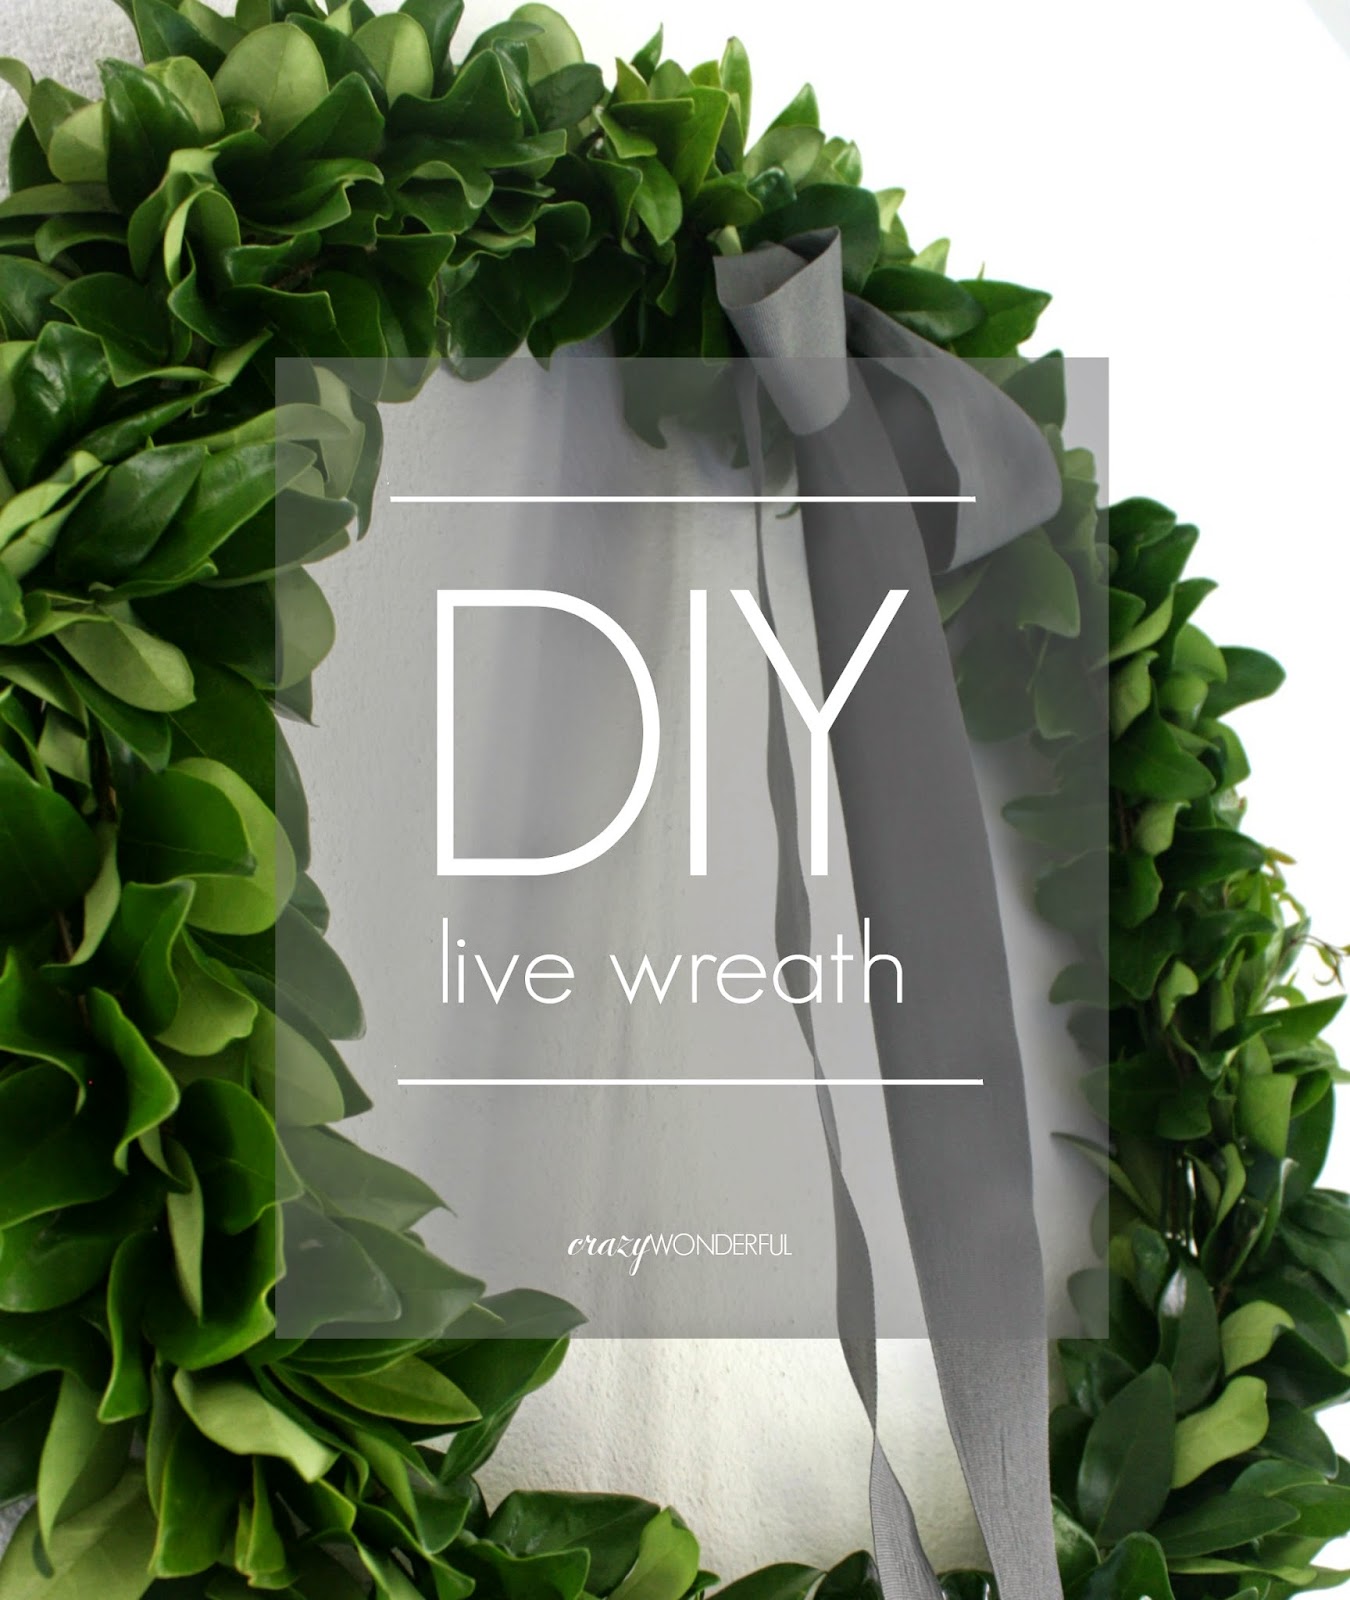 DIY live wreath